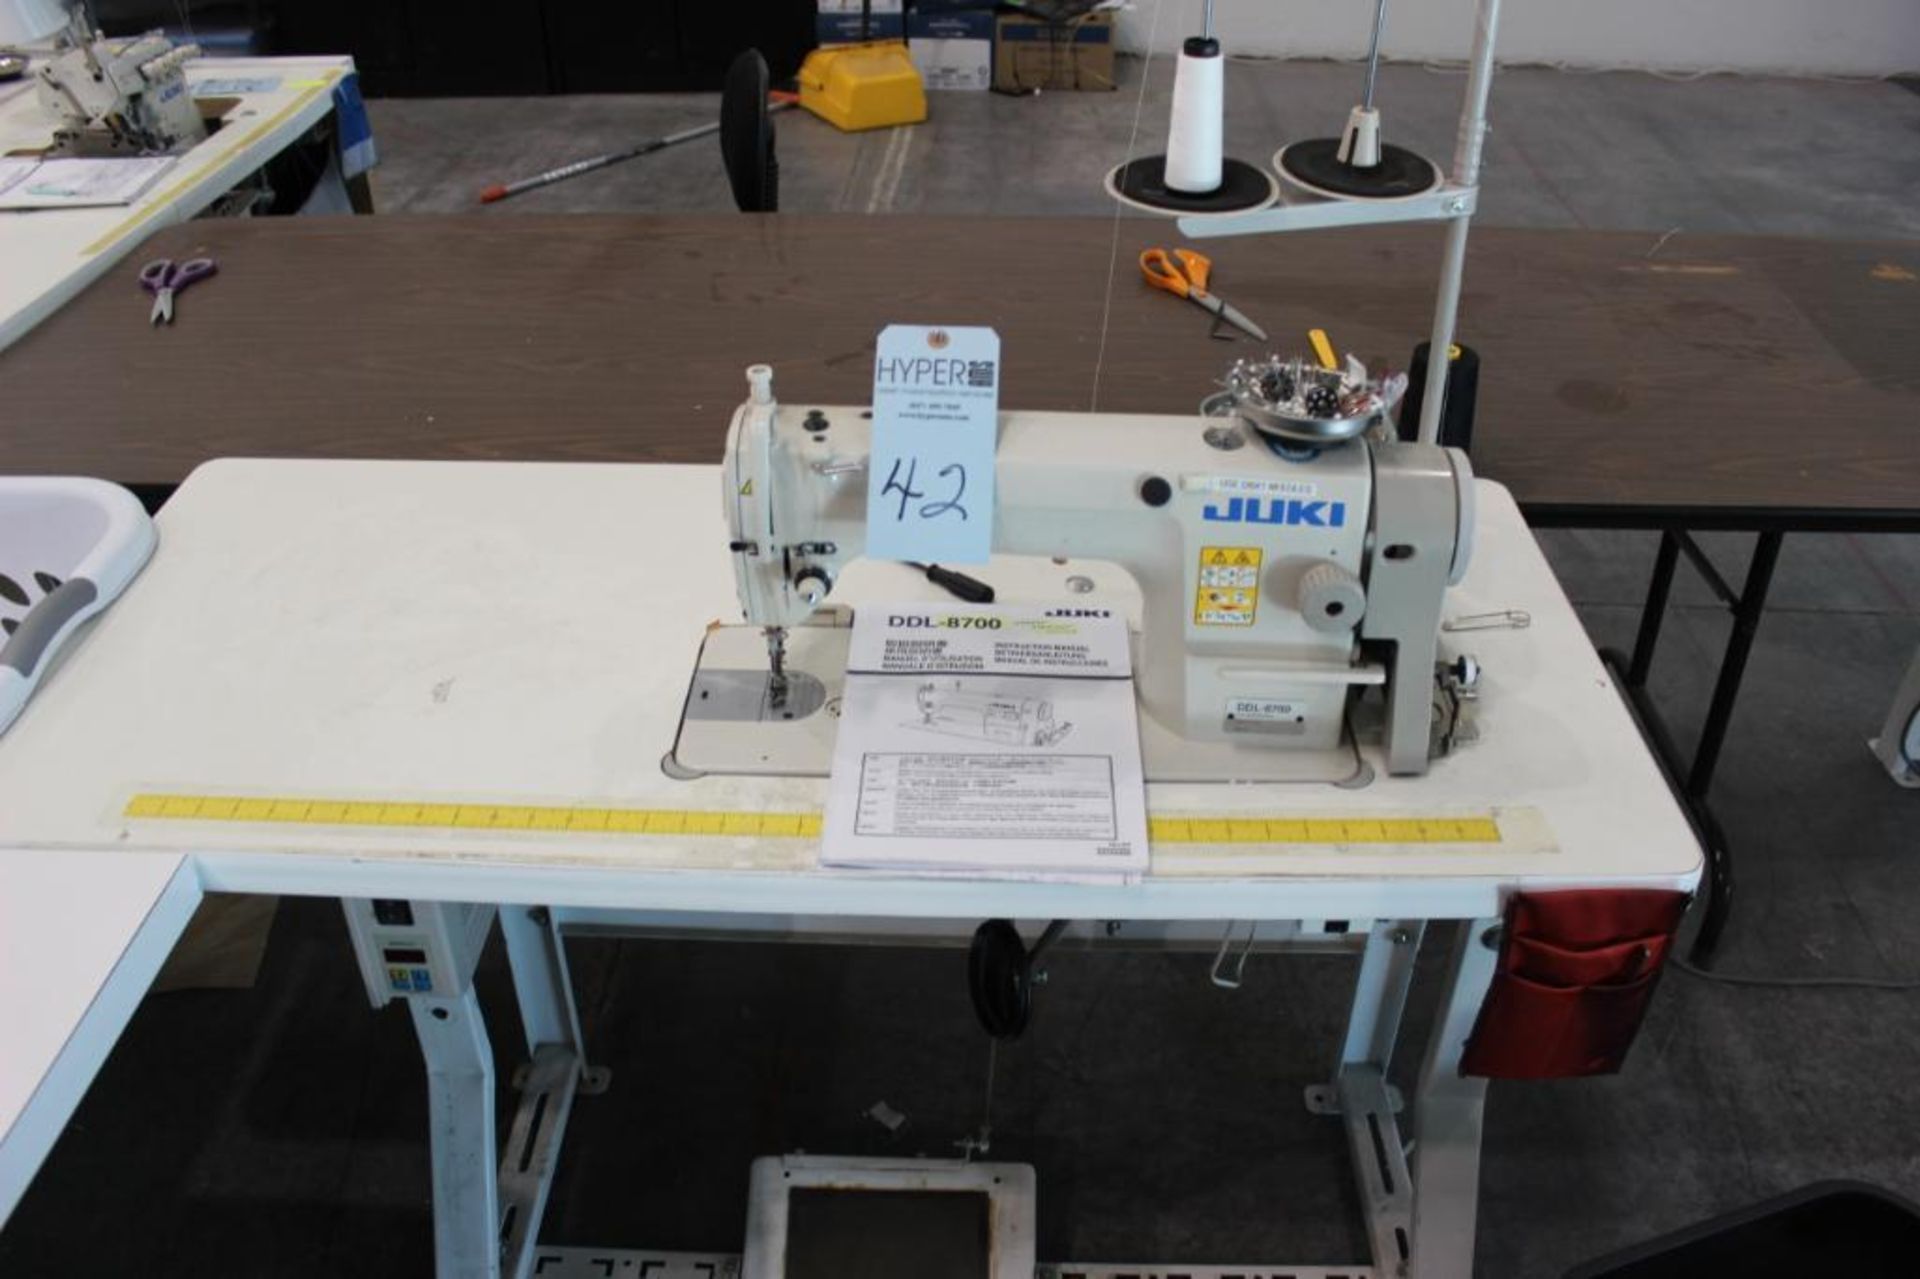 Juki model DDL-8700 sewing machine s/n 400HF12333 w/Sewing Table